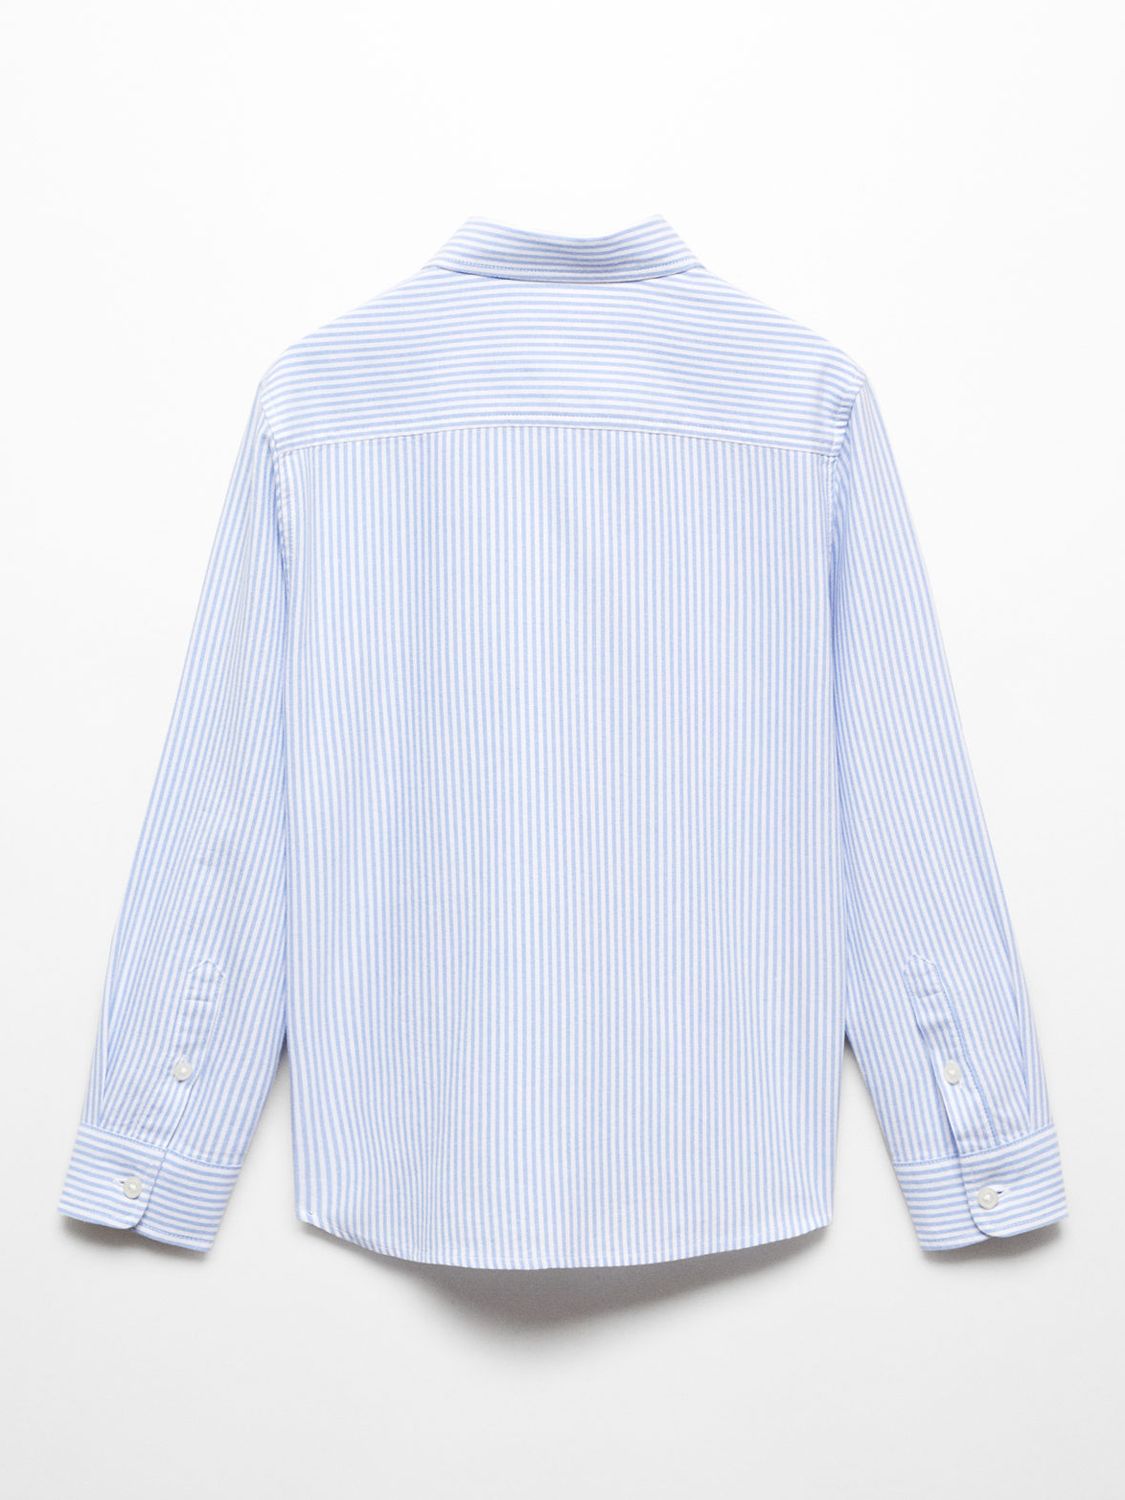 Mango Kids' Regular Fit Cotton Stripe Oxford Shirt, Medium Blue, 5 years